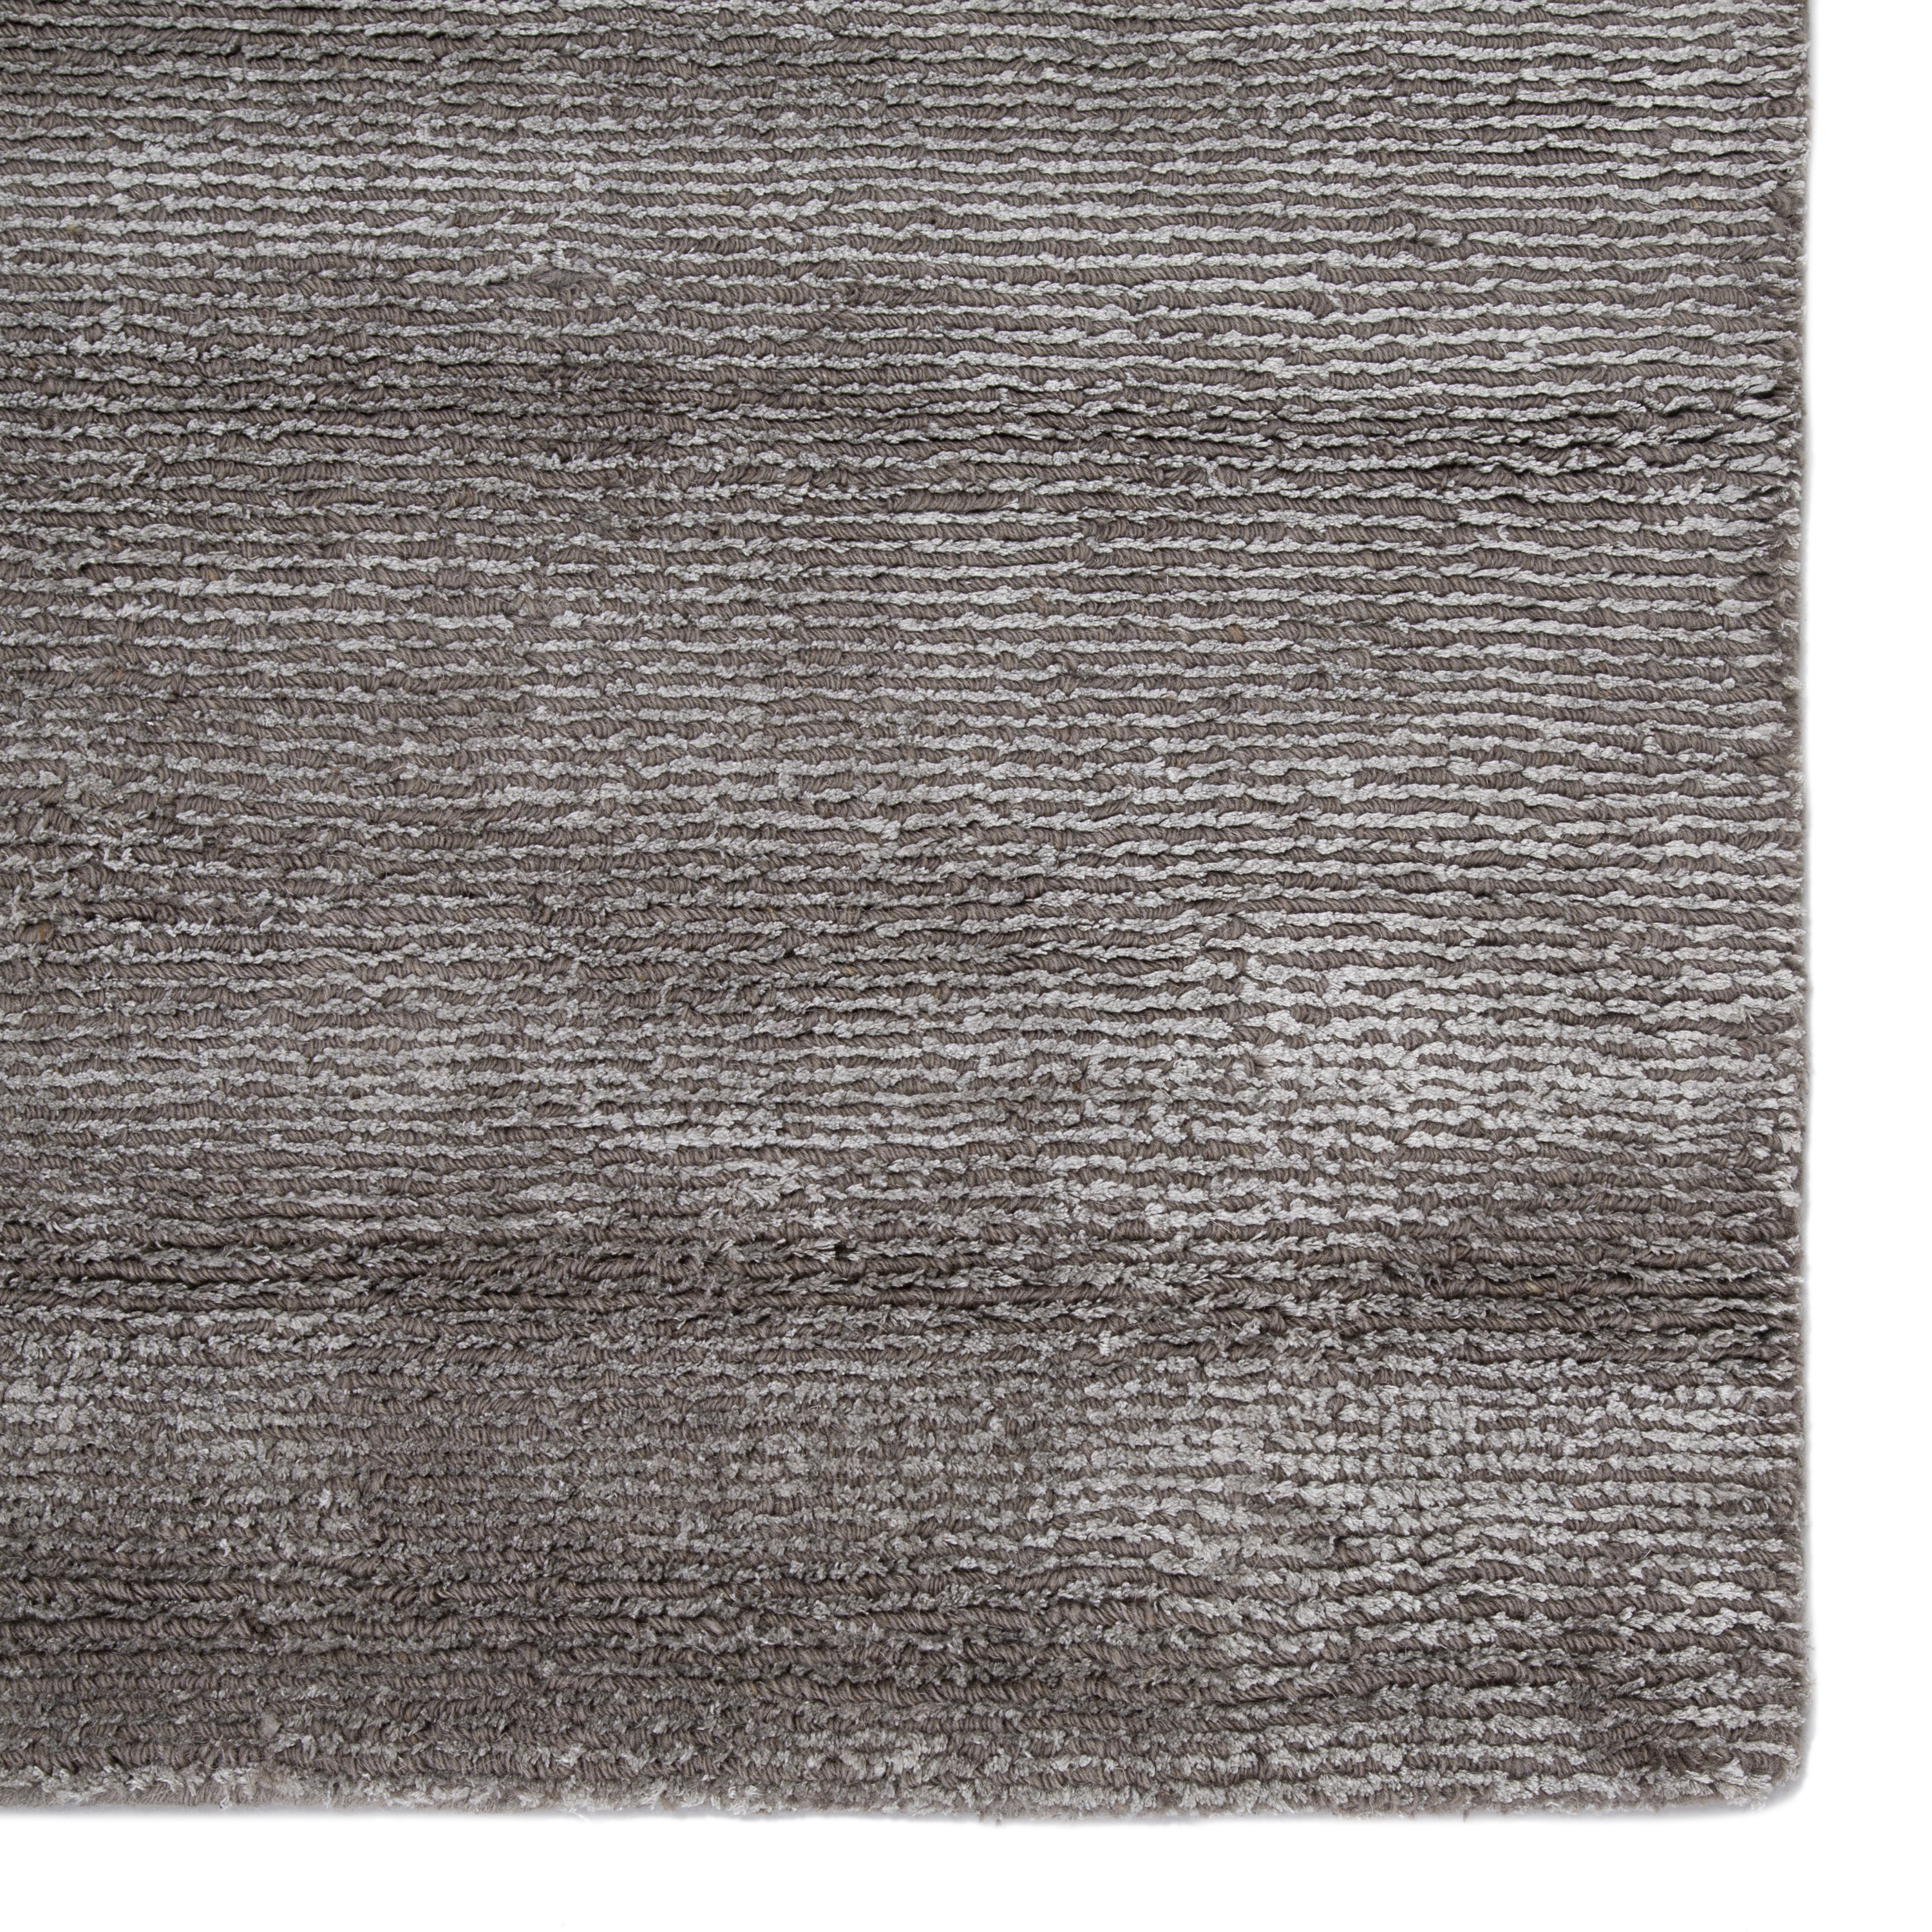 Kelle Handmade Solid Gray/ Silver Area Rug (9' X 13') - Image 3